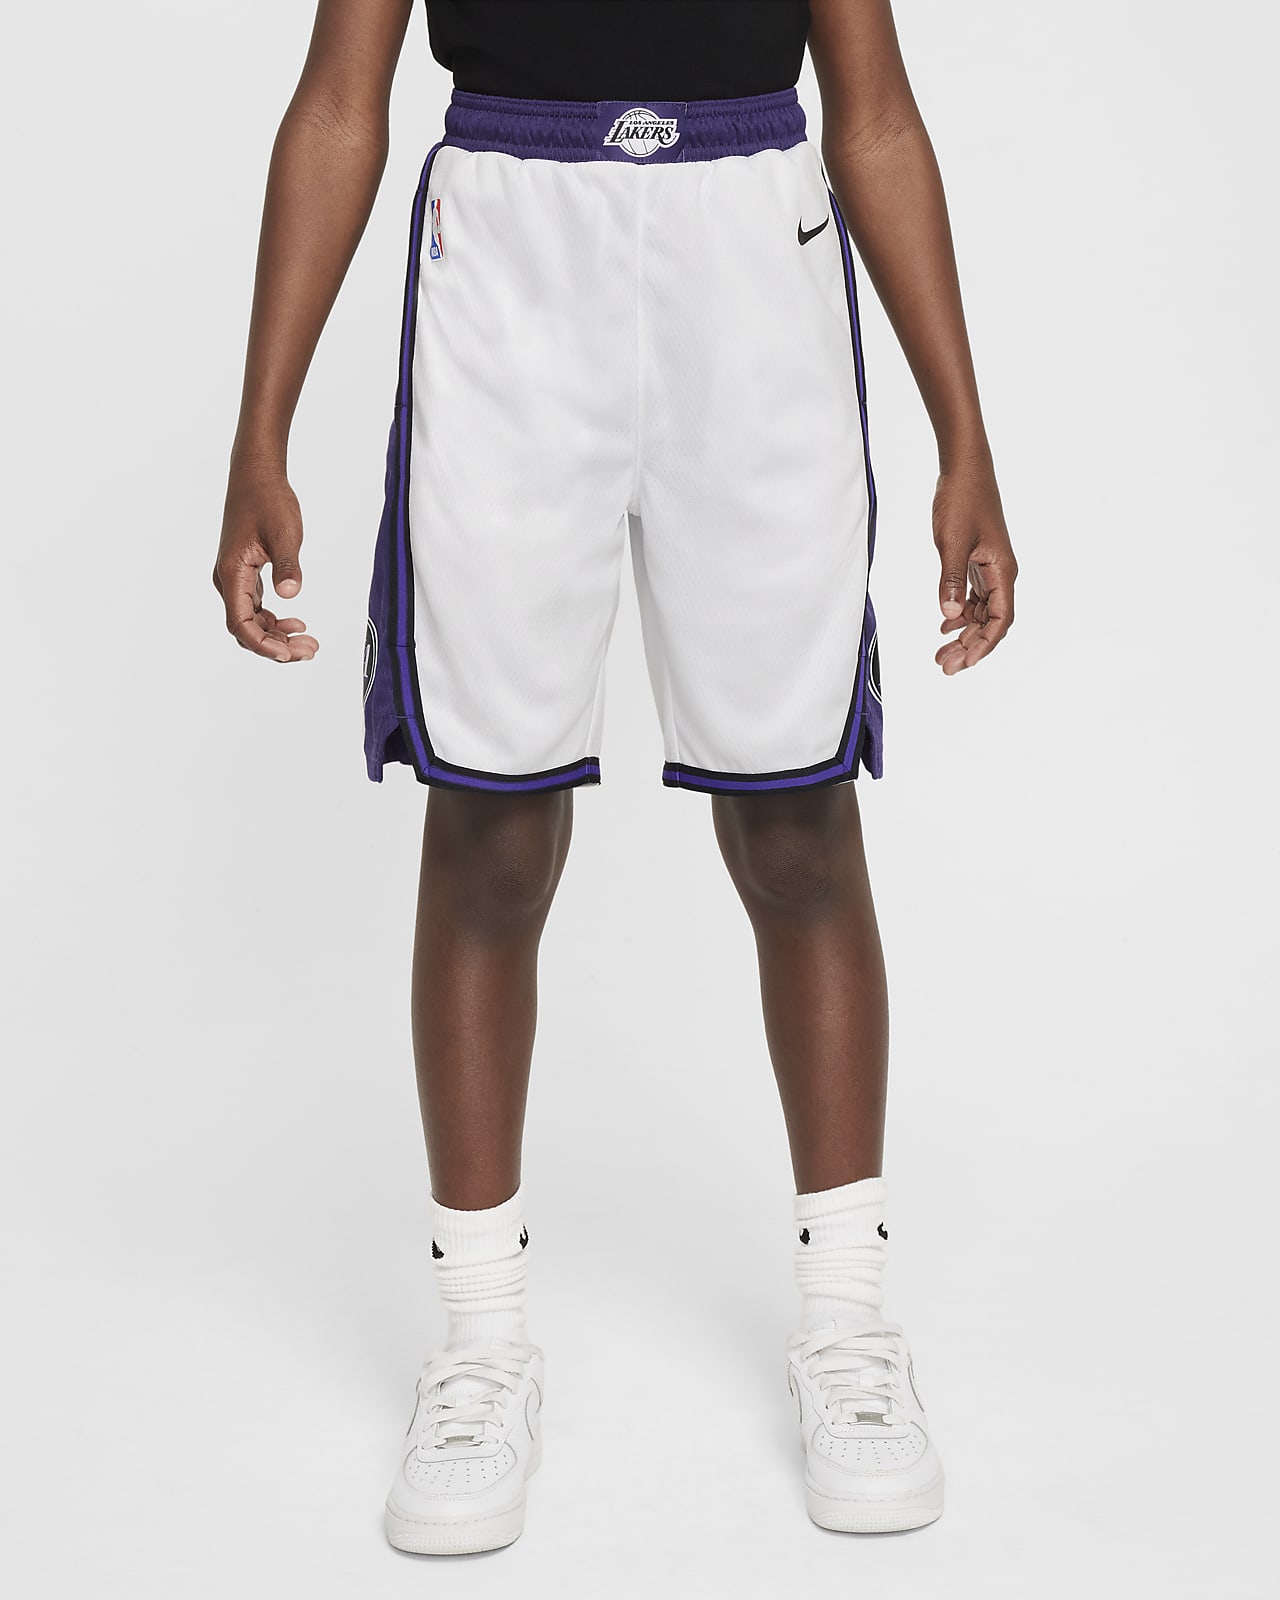 Los Angeles Lakers Pantalons curts Nike Dri-FIT NBA Swingman - Nen/a